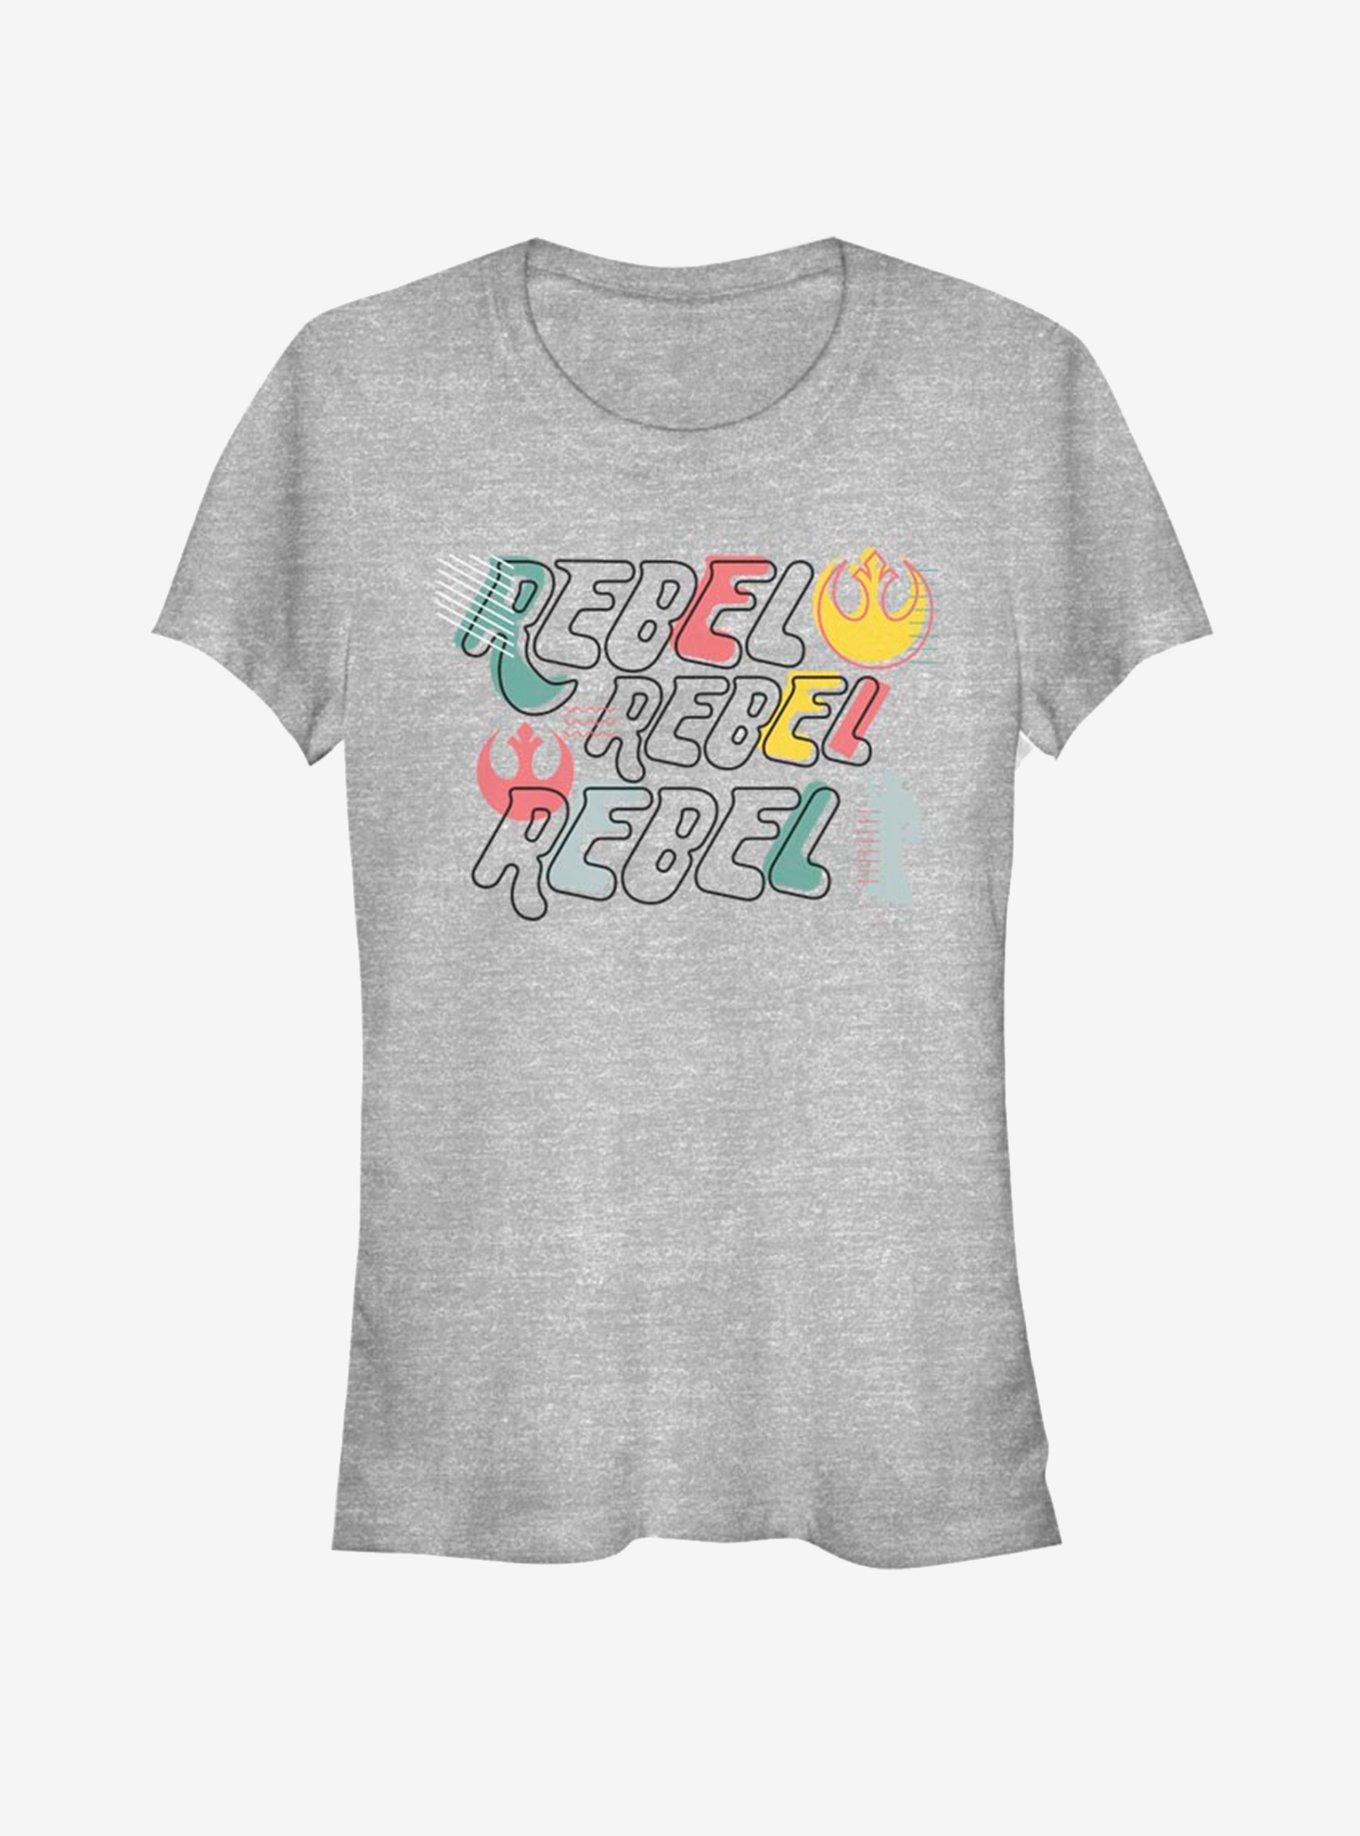 Star Wars Rebel Girls T-Shirt